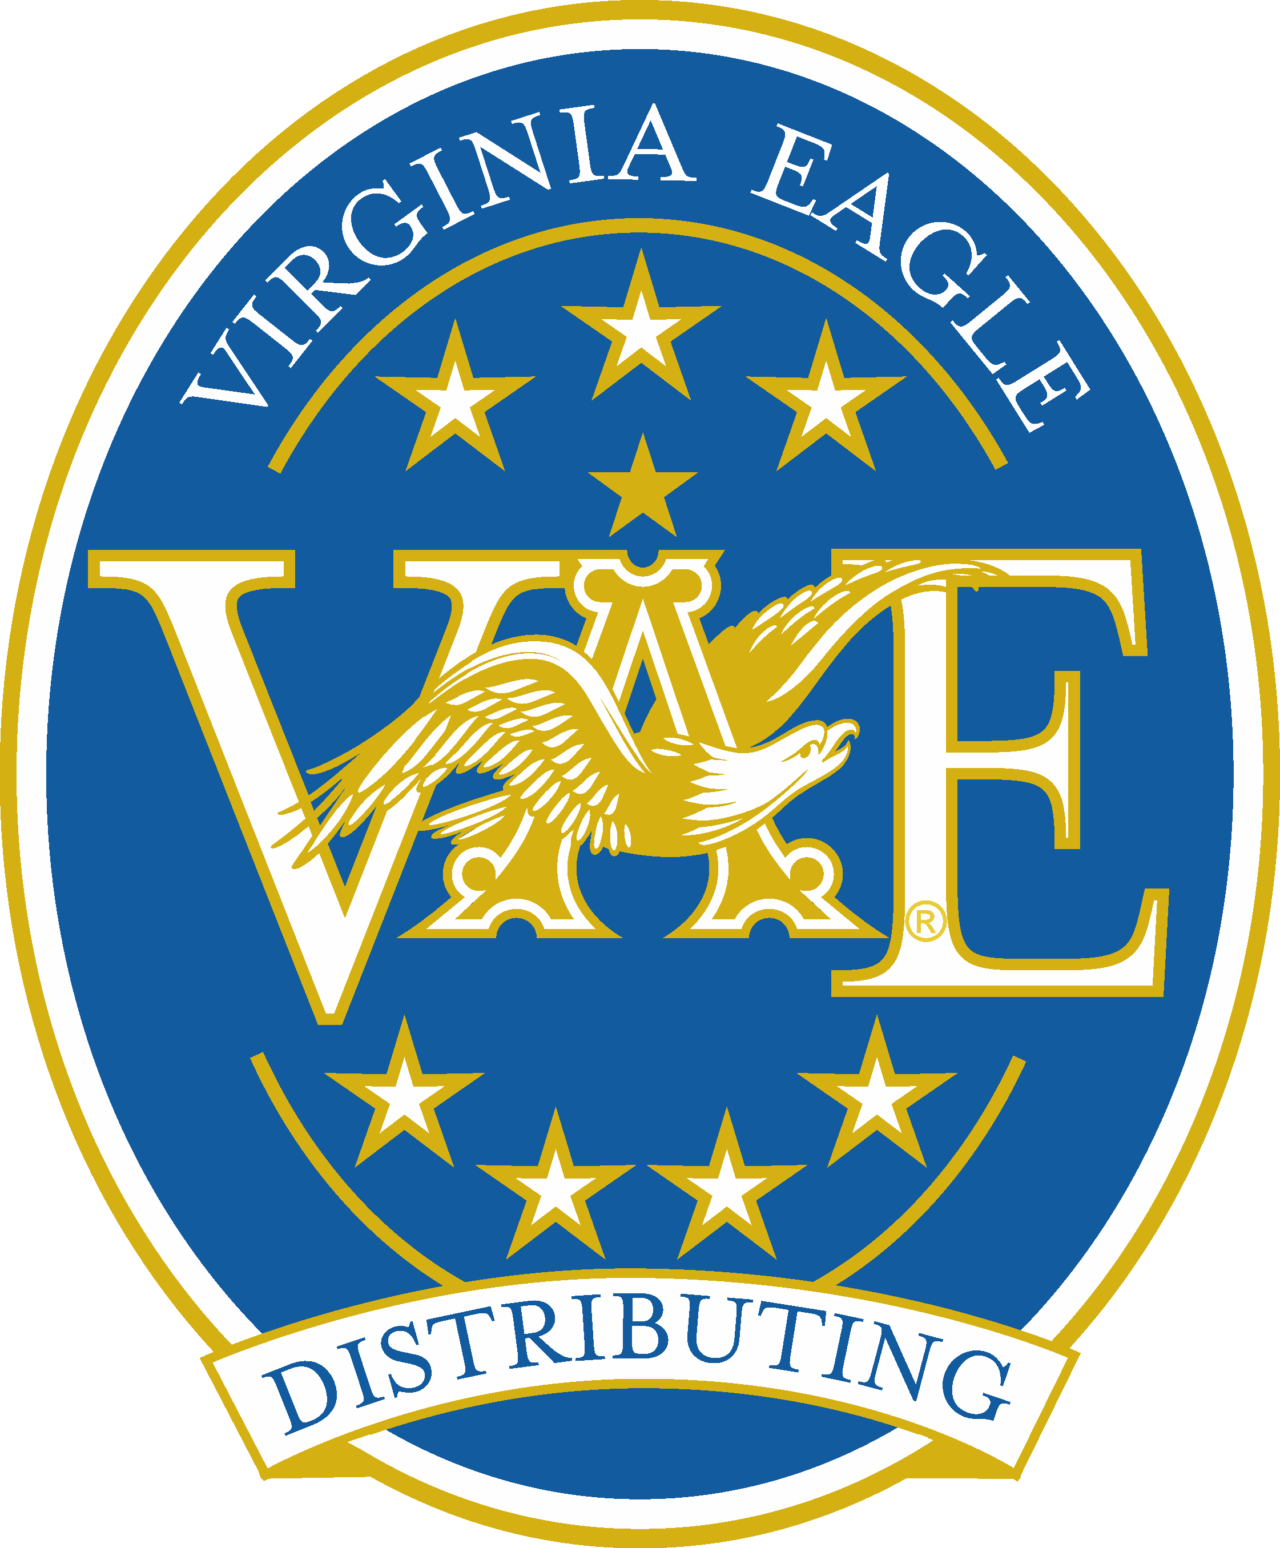 Virginia Eagle Distributing